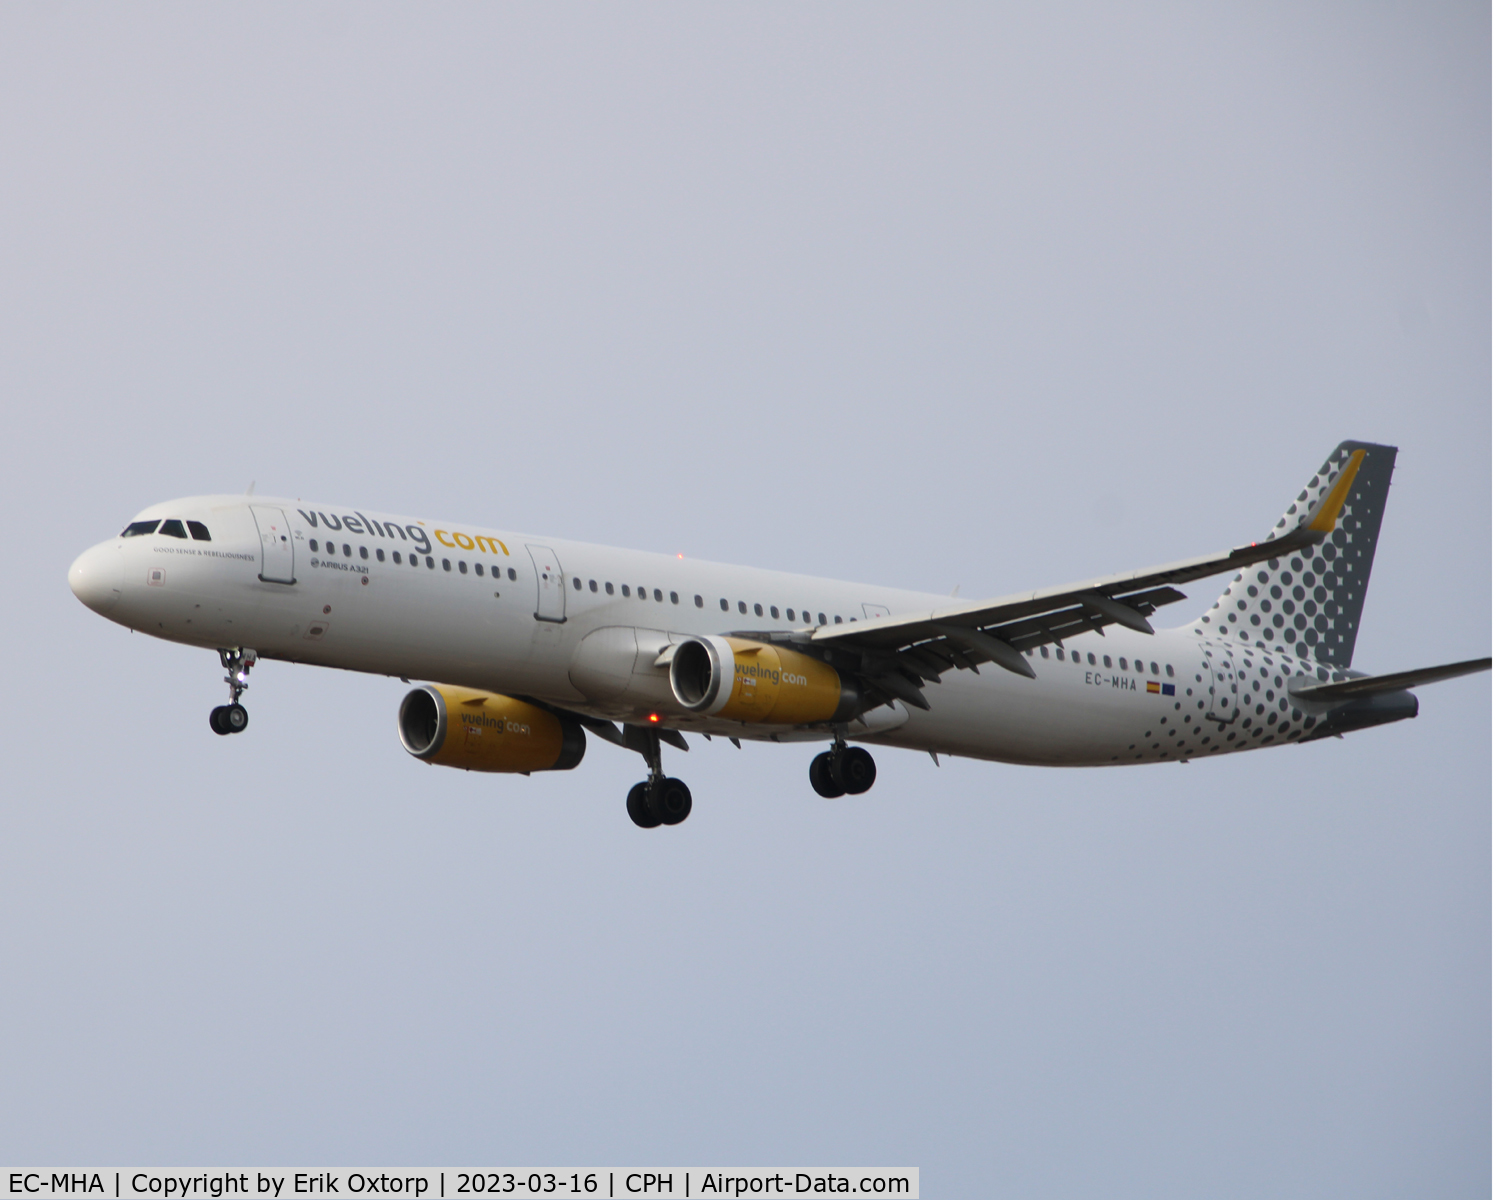 EC-MHA, 2015 Airbus A321-231 C/N 6684, EC-MHA landing rw 22L